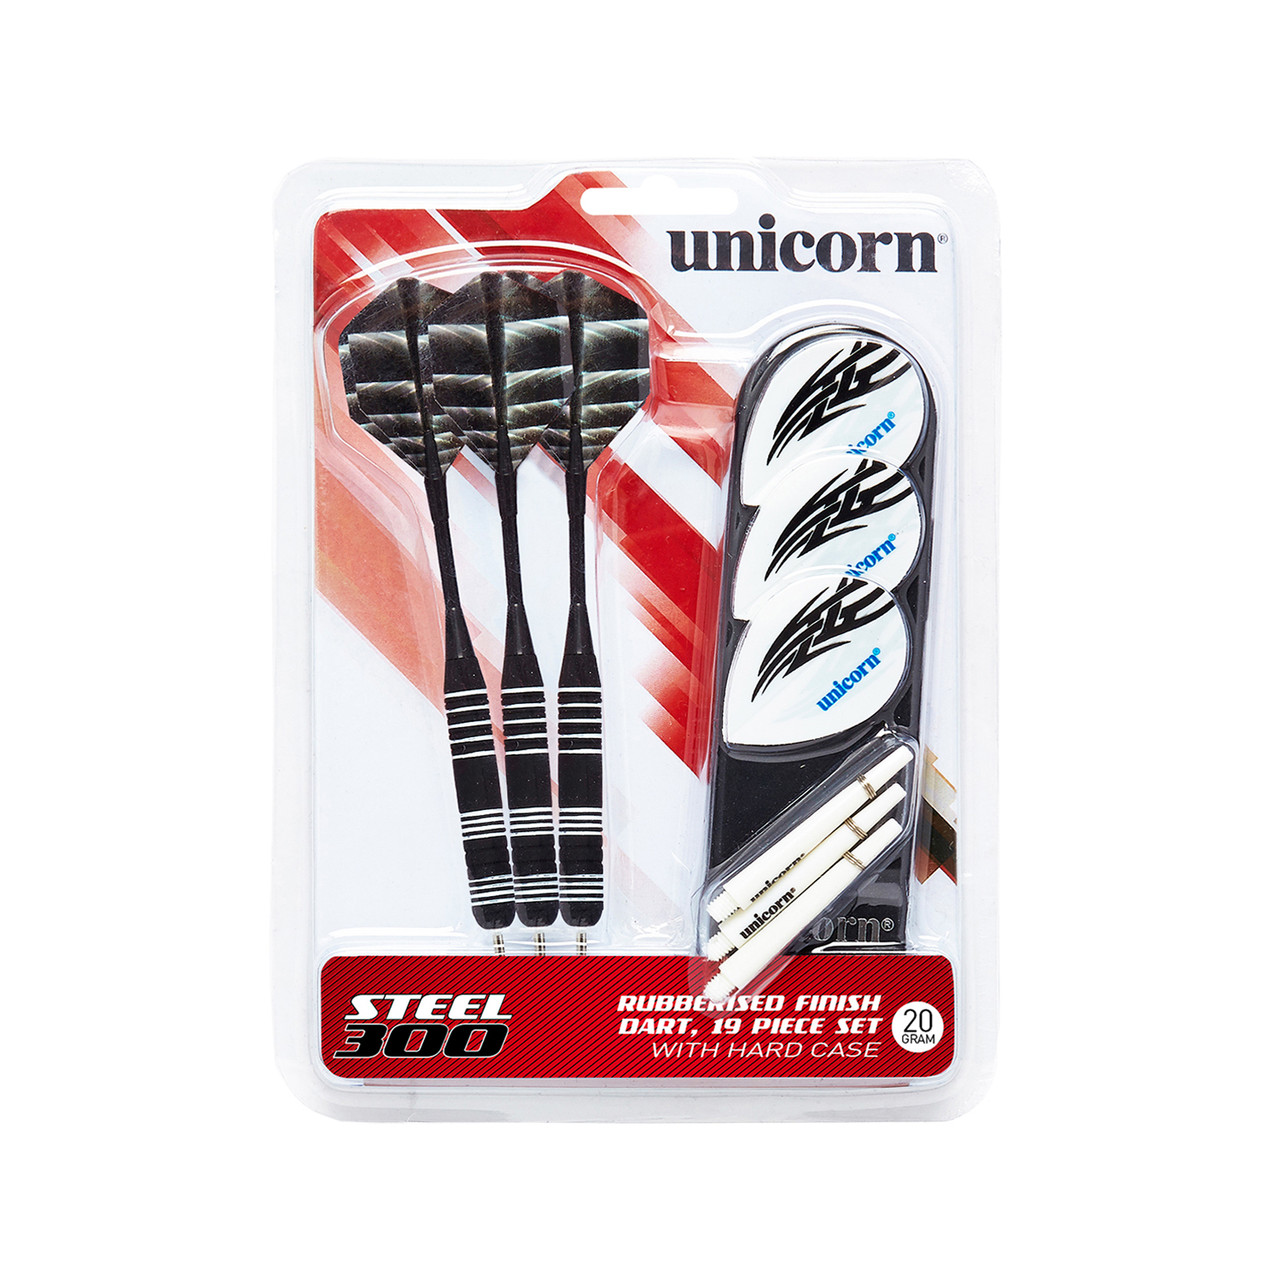 Unicorn Steel 300 Dart Set - D71814 - FCI Billiards